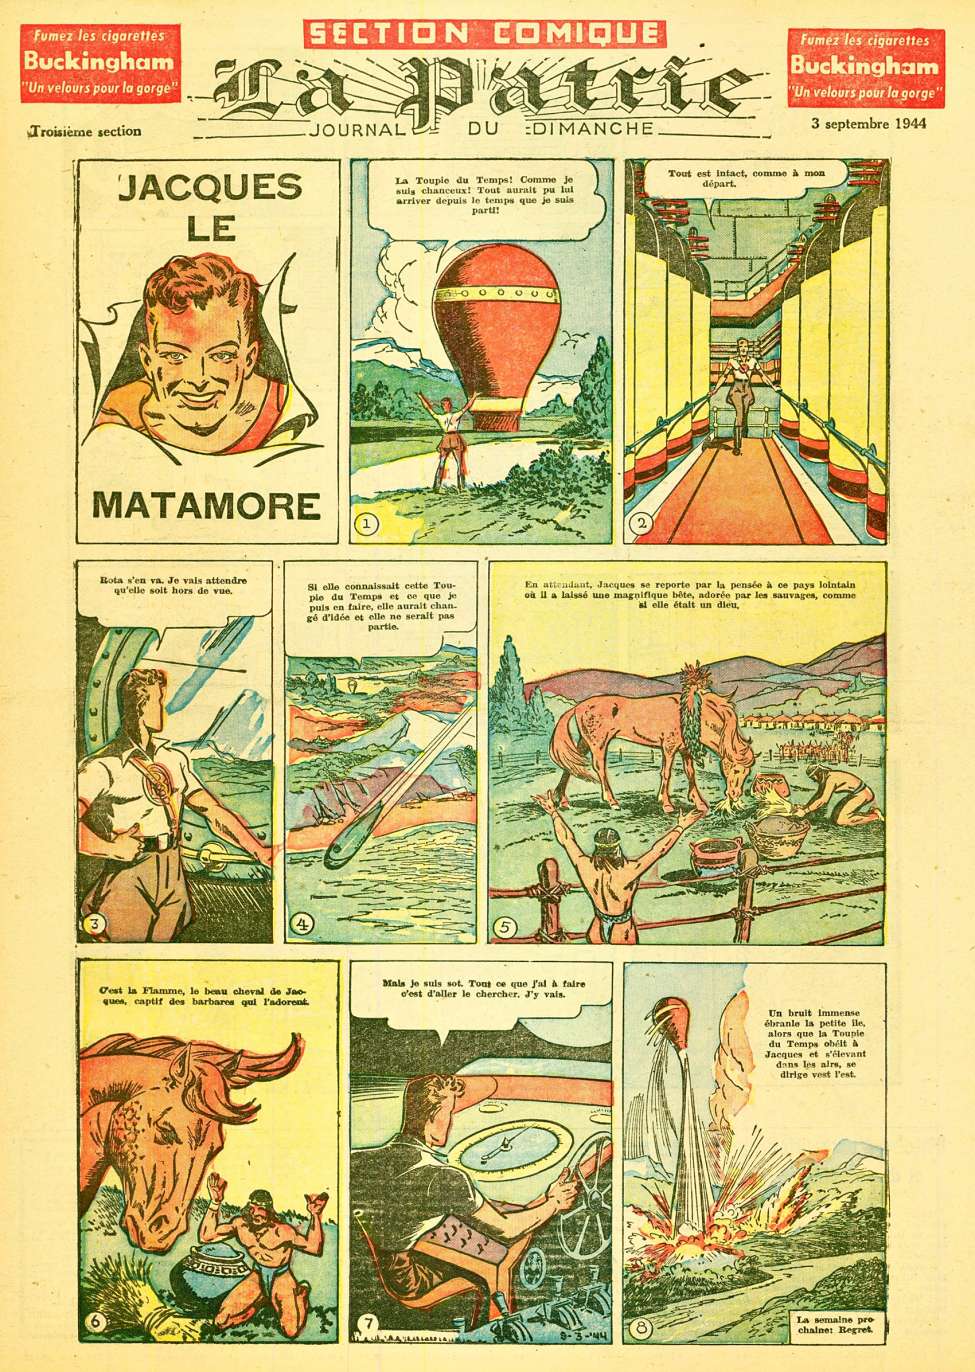 Comic Book Cover For La Patrie - Section Comique (1944-09-03)